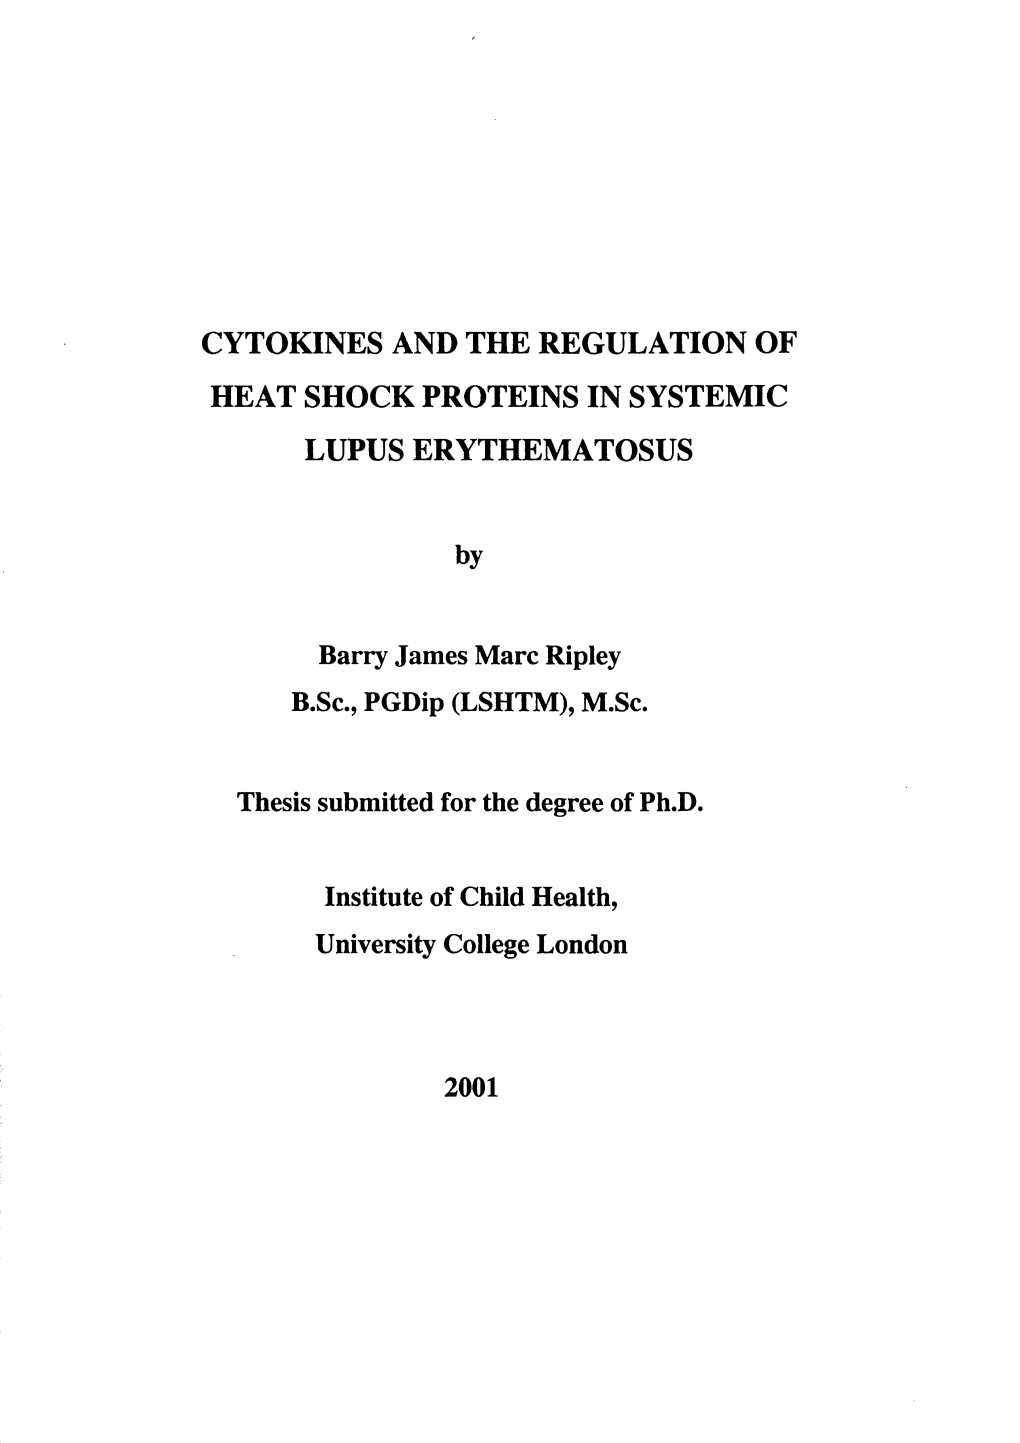 Heat Shock Proteins in Systemic Lupus Erythematosus